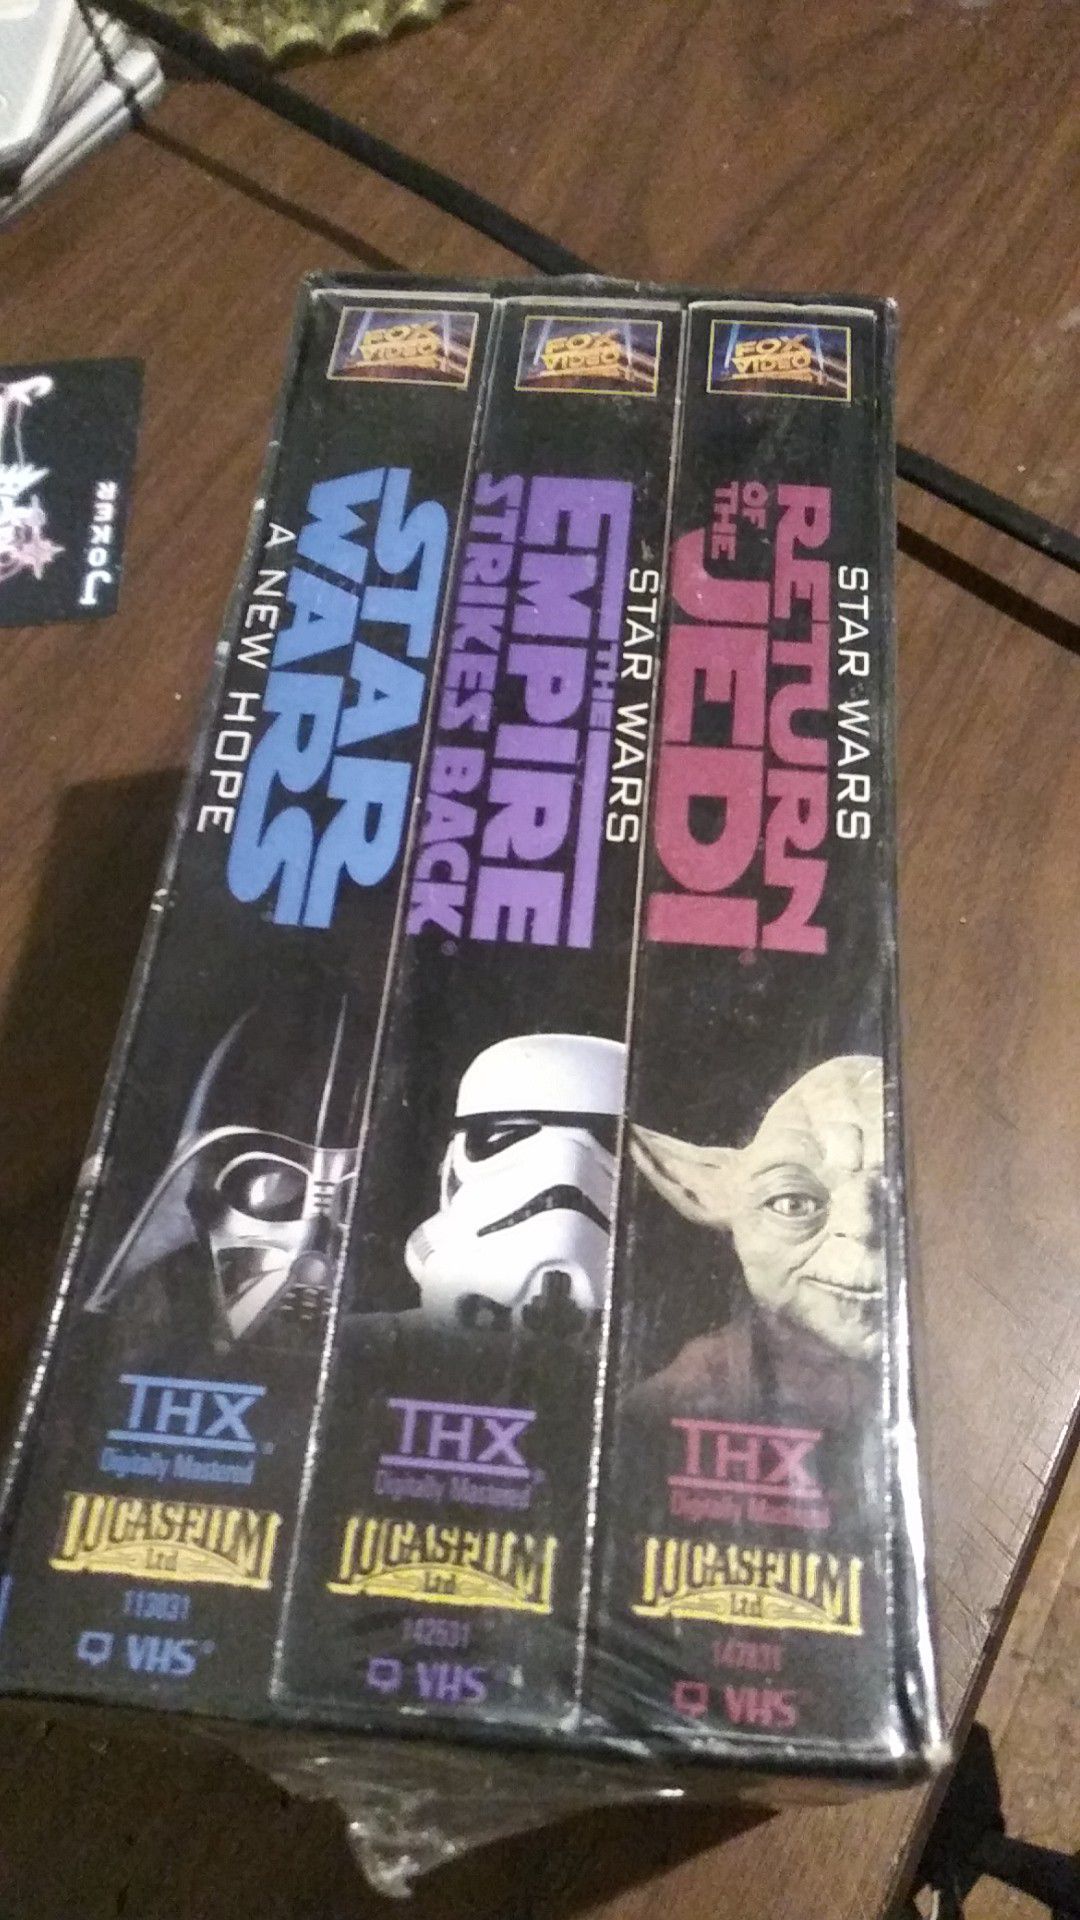 Video cassette star Wars, Empire strike back and return of the Jedi